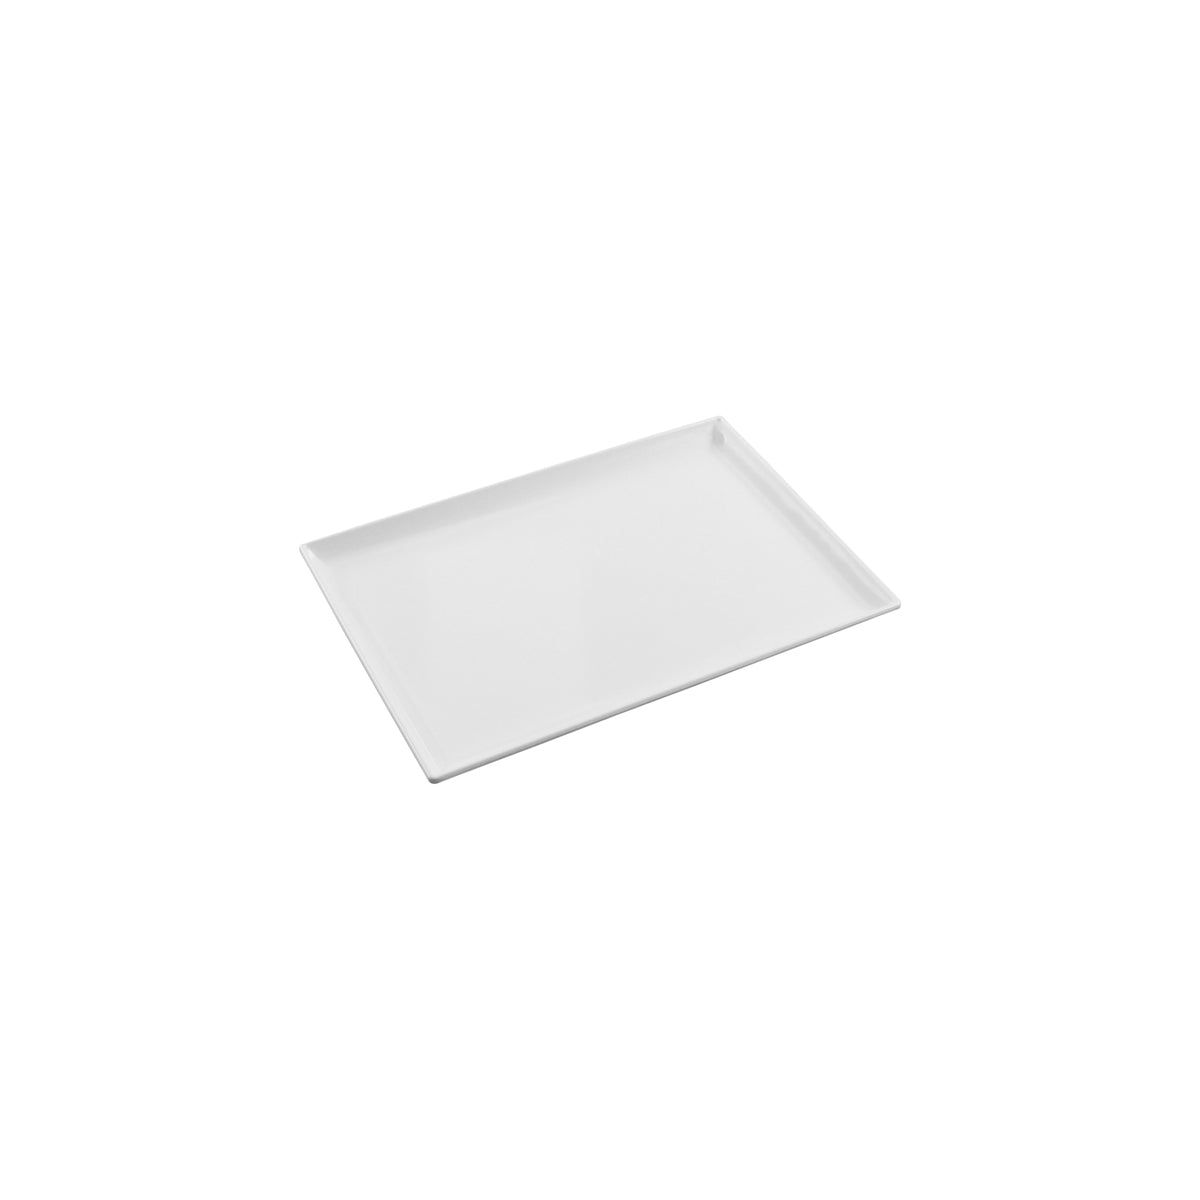 49027 Superware White Rectangular Platter 250x170mm Tomkin Australia Hospitality Supplies